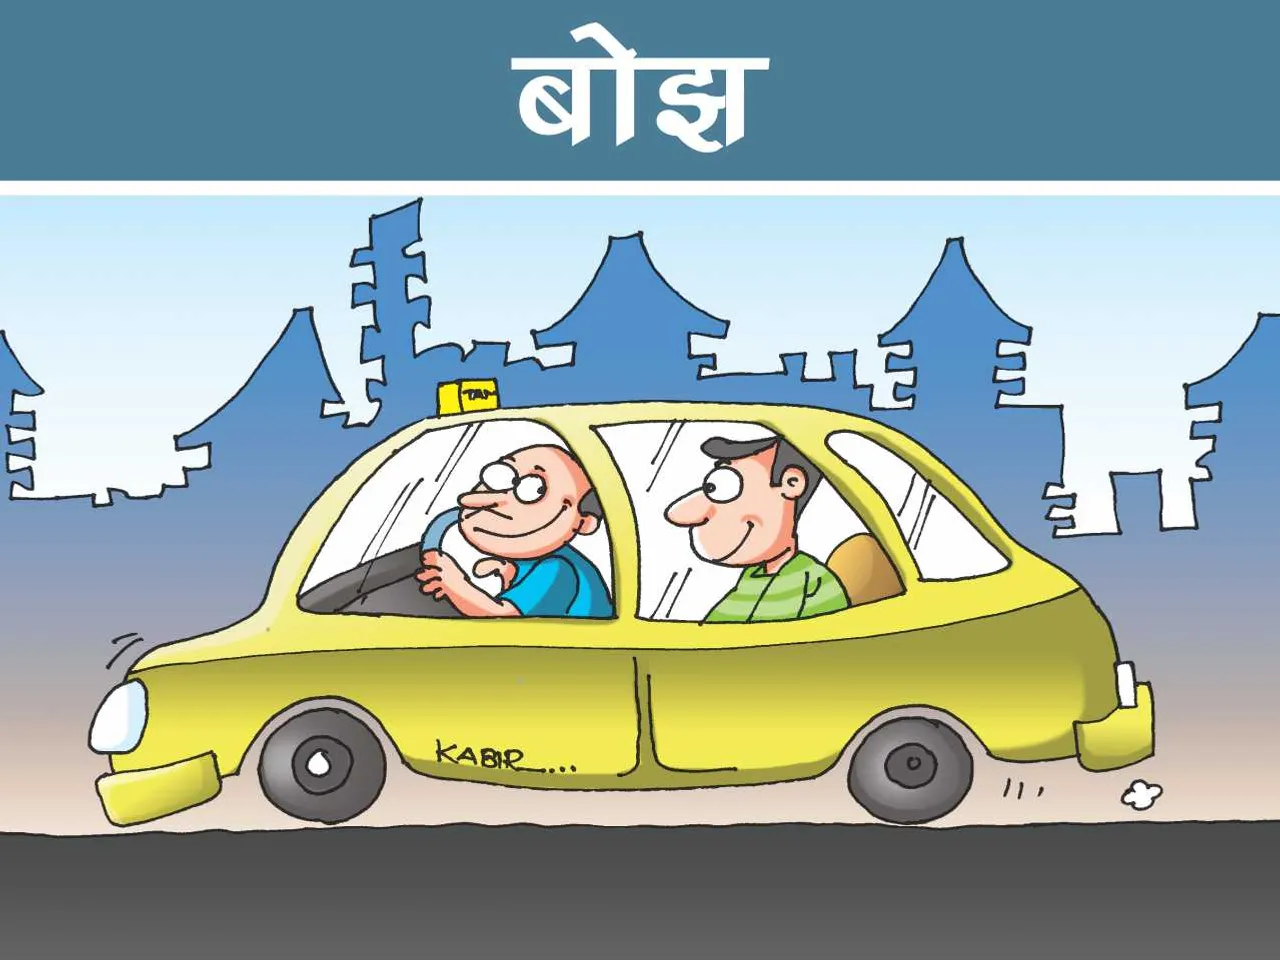 Man in taxi cartoon image